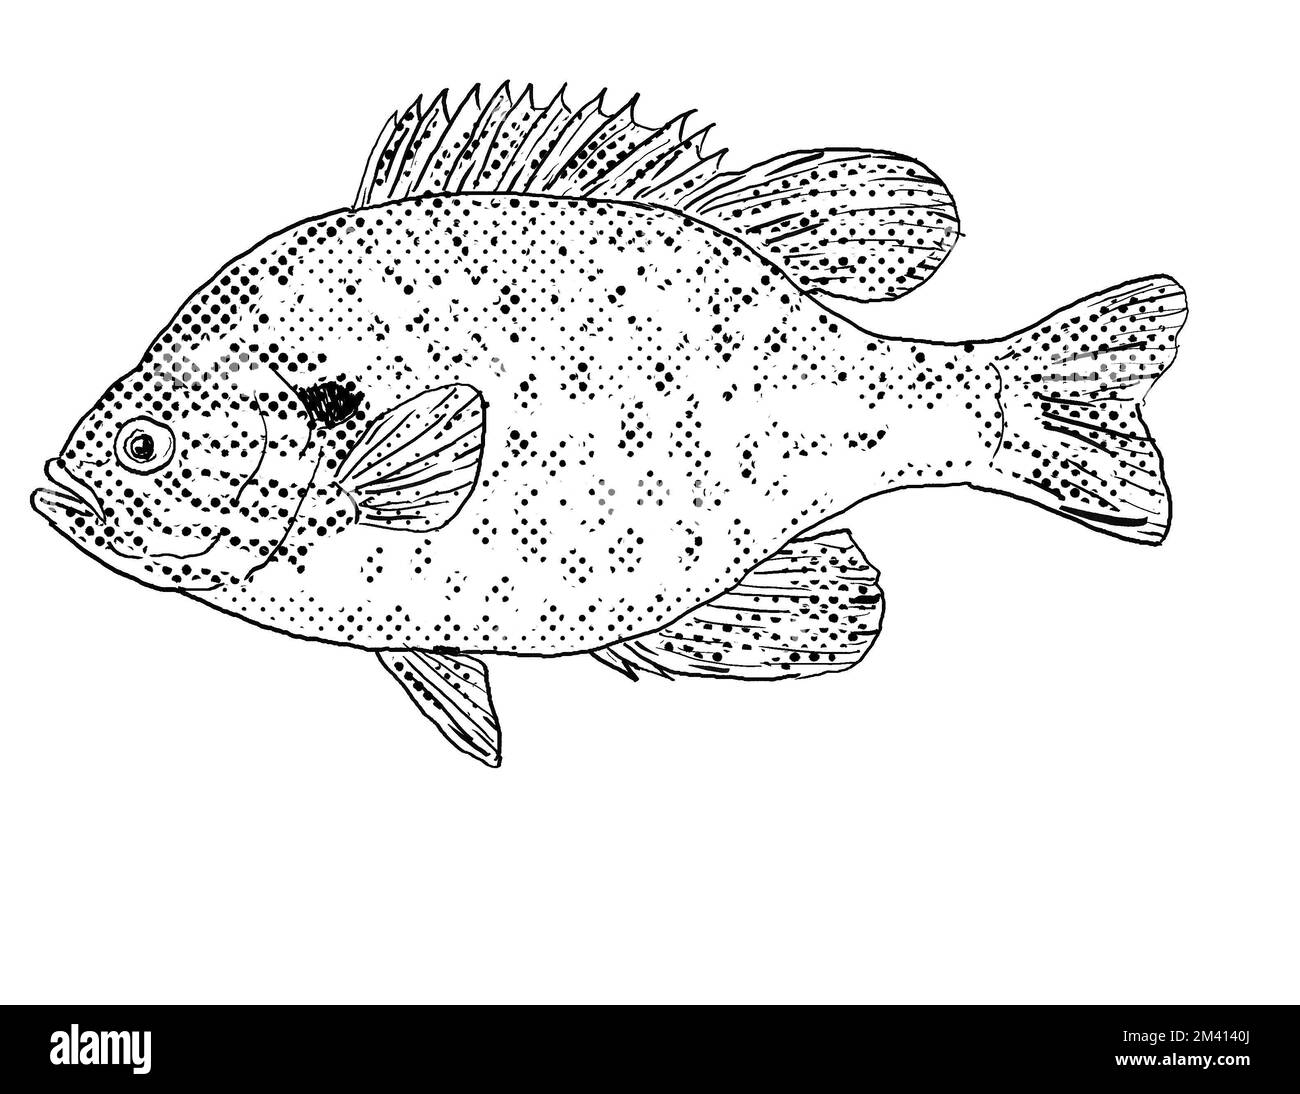 A Cartoon style line drawing of a pumpkinseed x bluegill sunfish Stock  Photo - Alamy